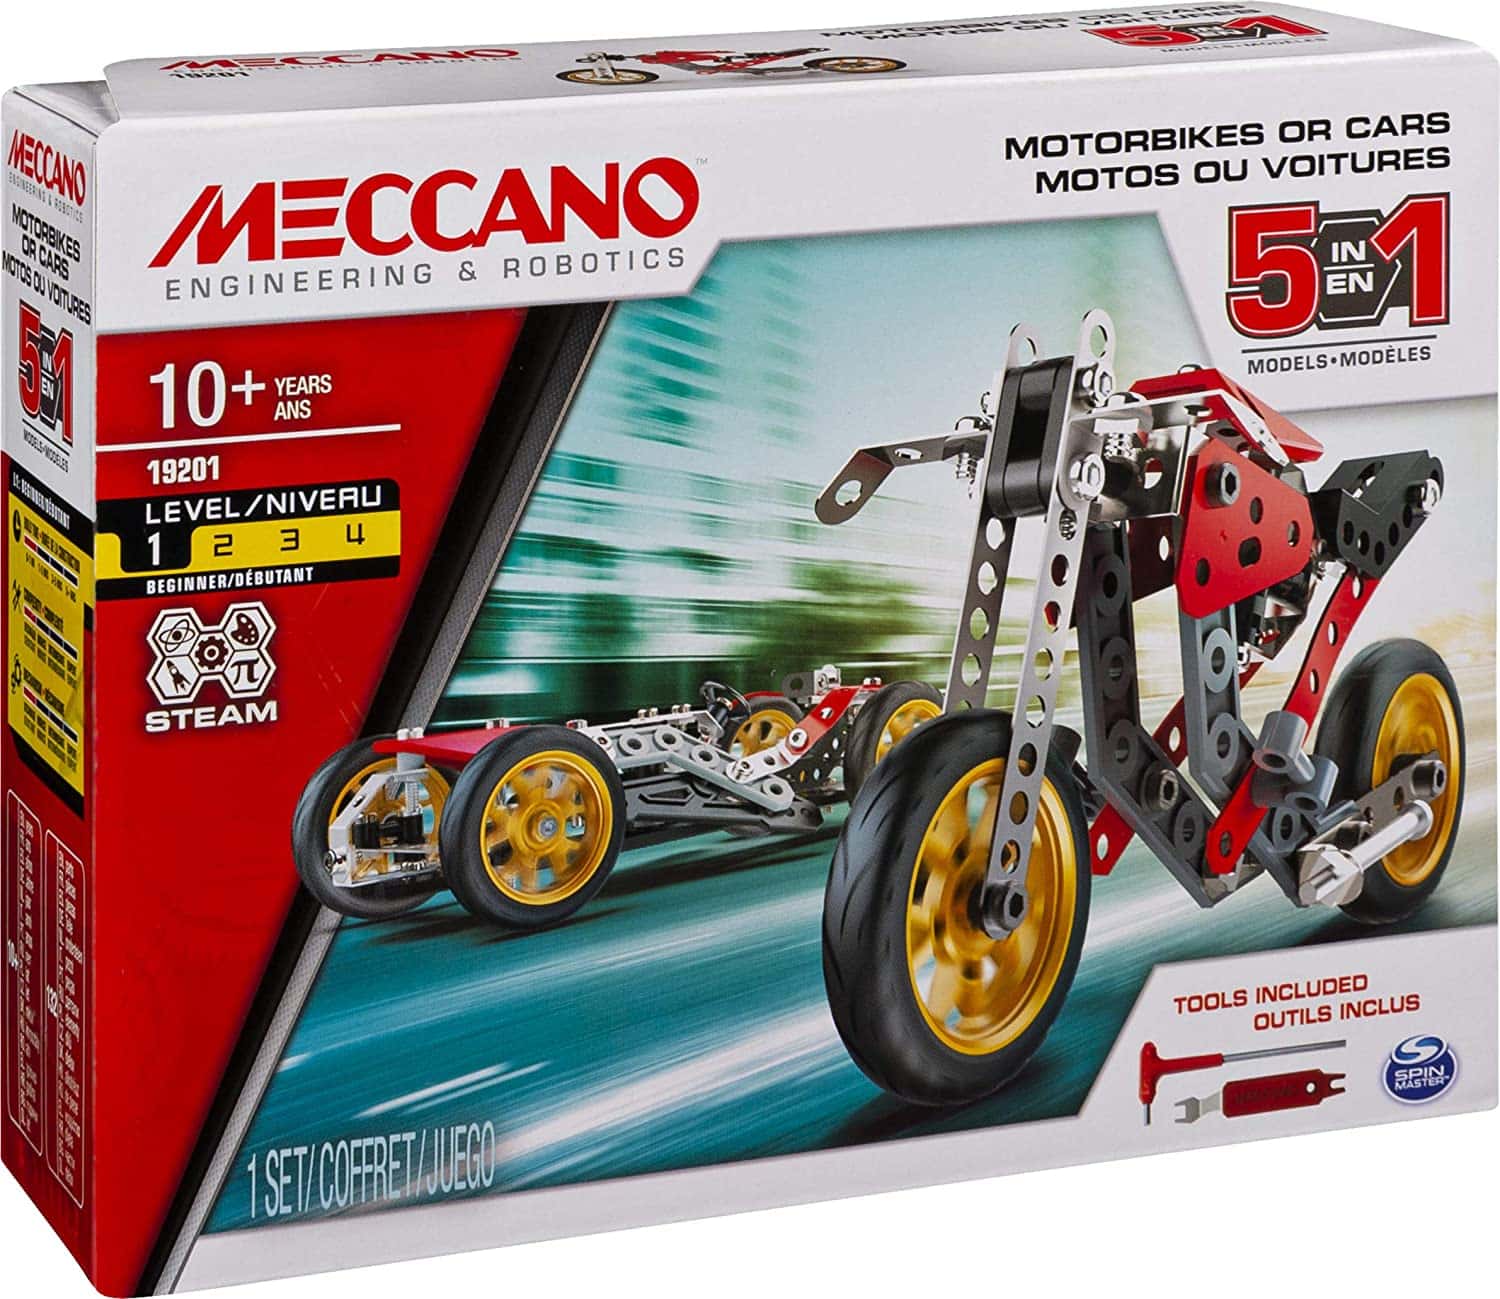 Meccano 20 Modeles New Generation